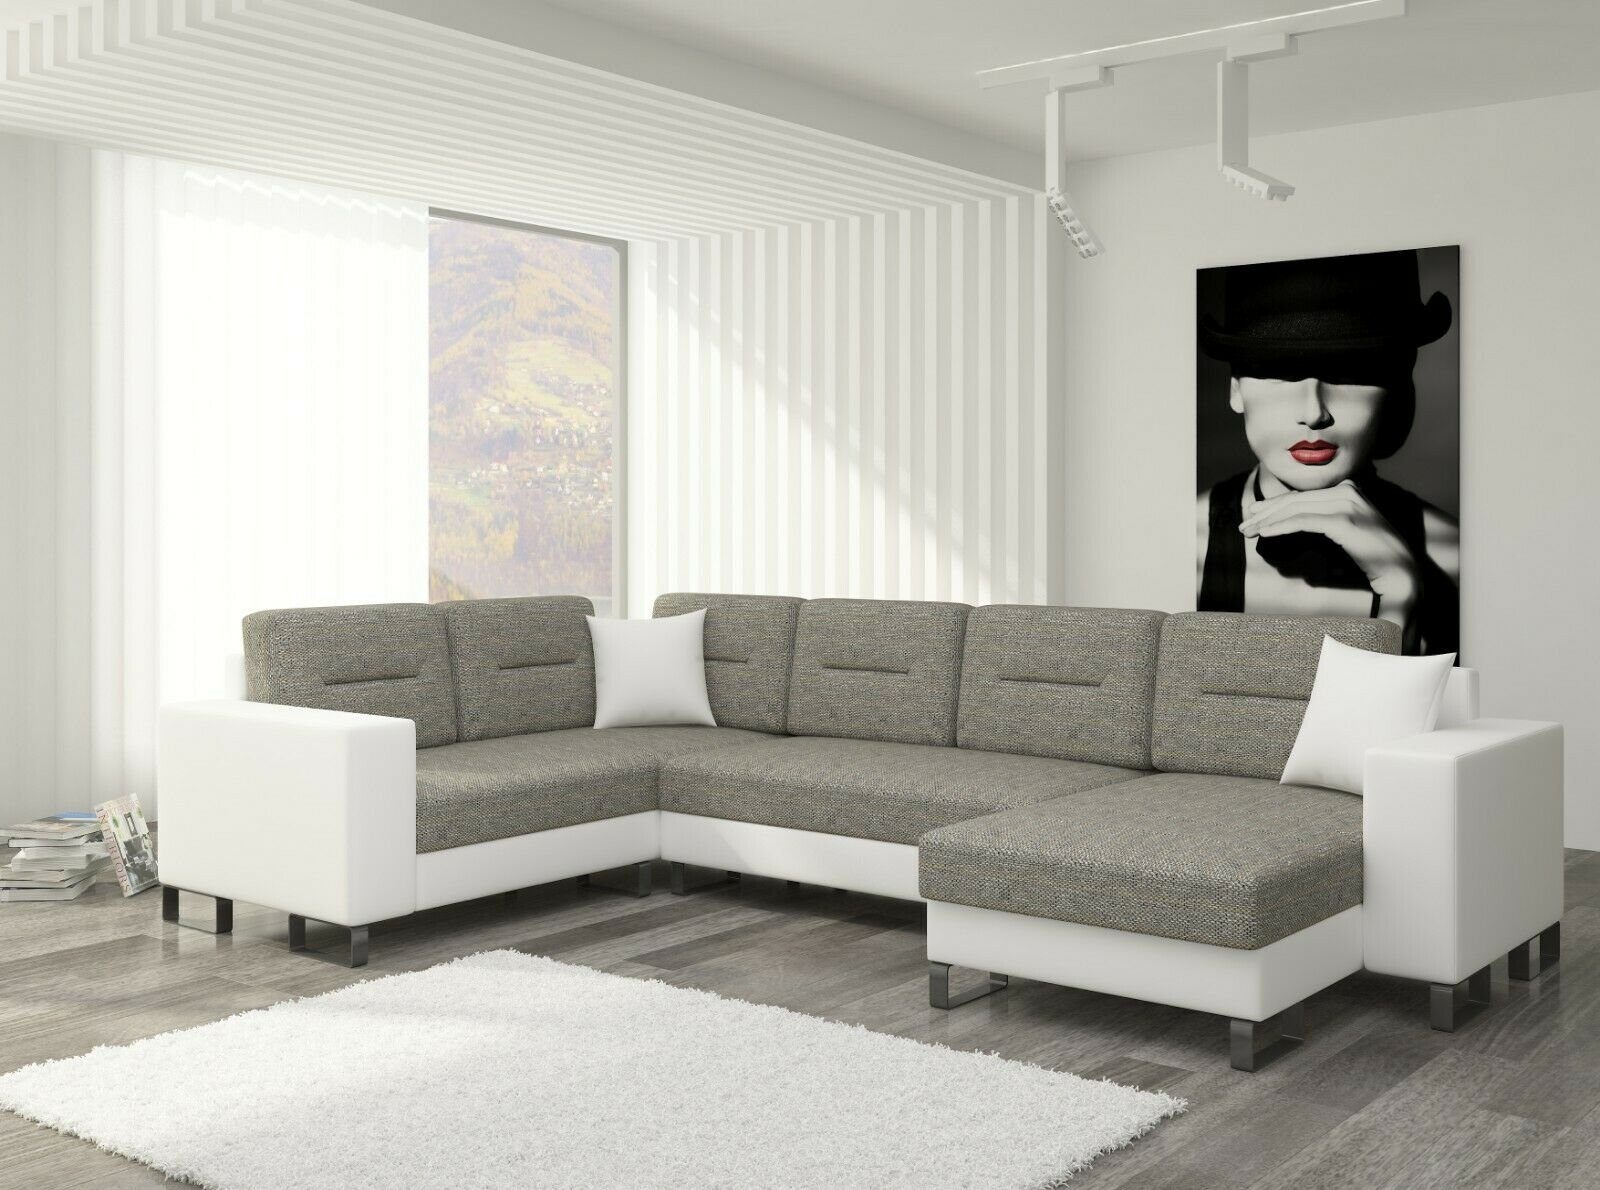 JVmoebel Ecksofa Design Ecksofa Schlafsofa Bettfunktion Couch Leder Polster Textil, Mit Bettfunktion Hellgrau/Weiß